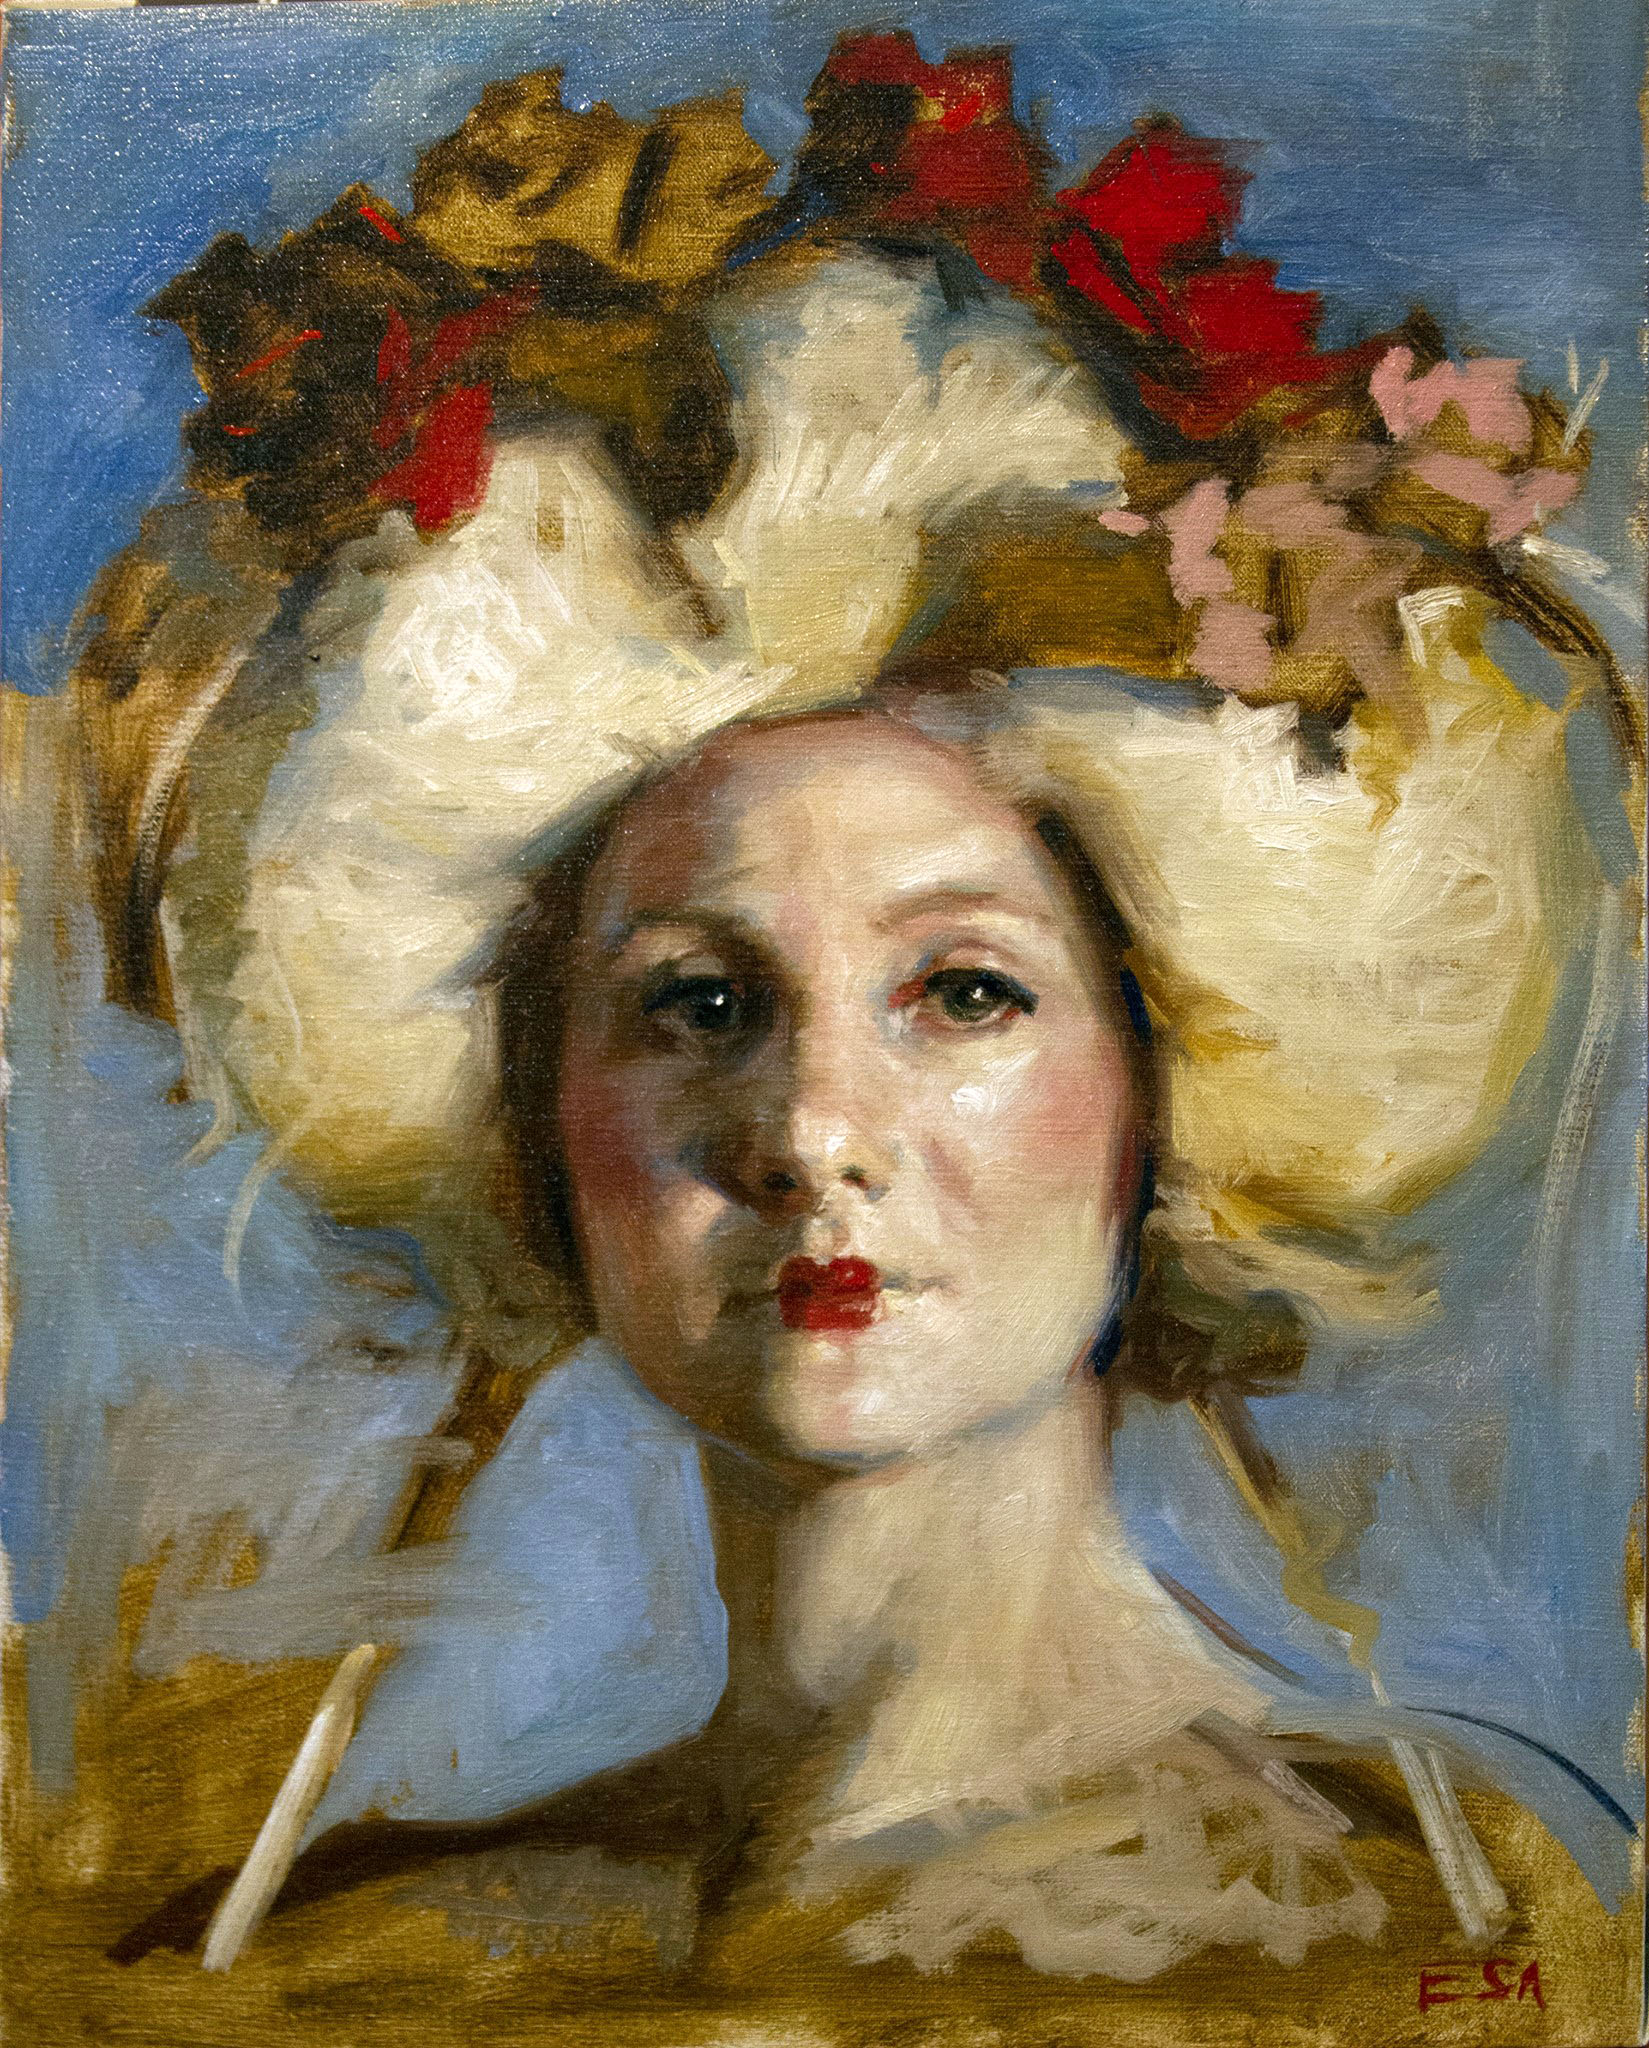 Teresa Oaxaca, Impression of a Lady, 16 x 20, oil on canvas